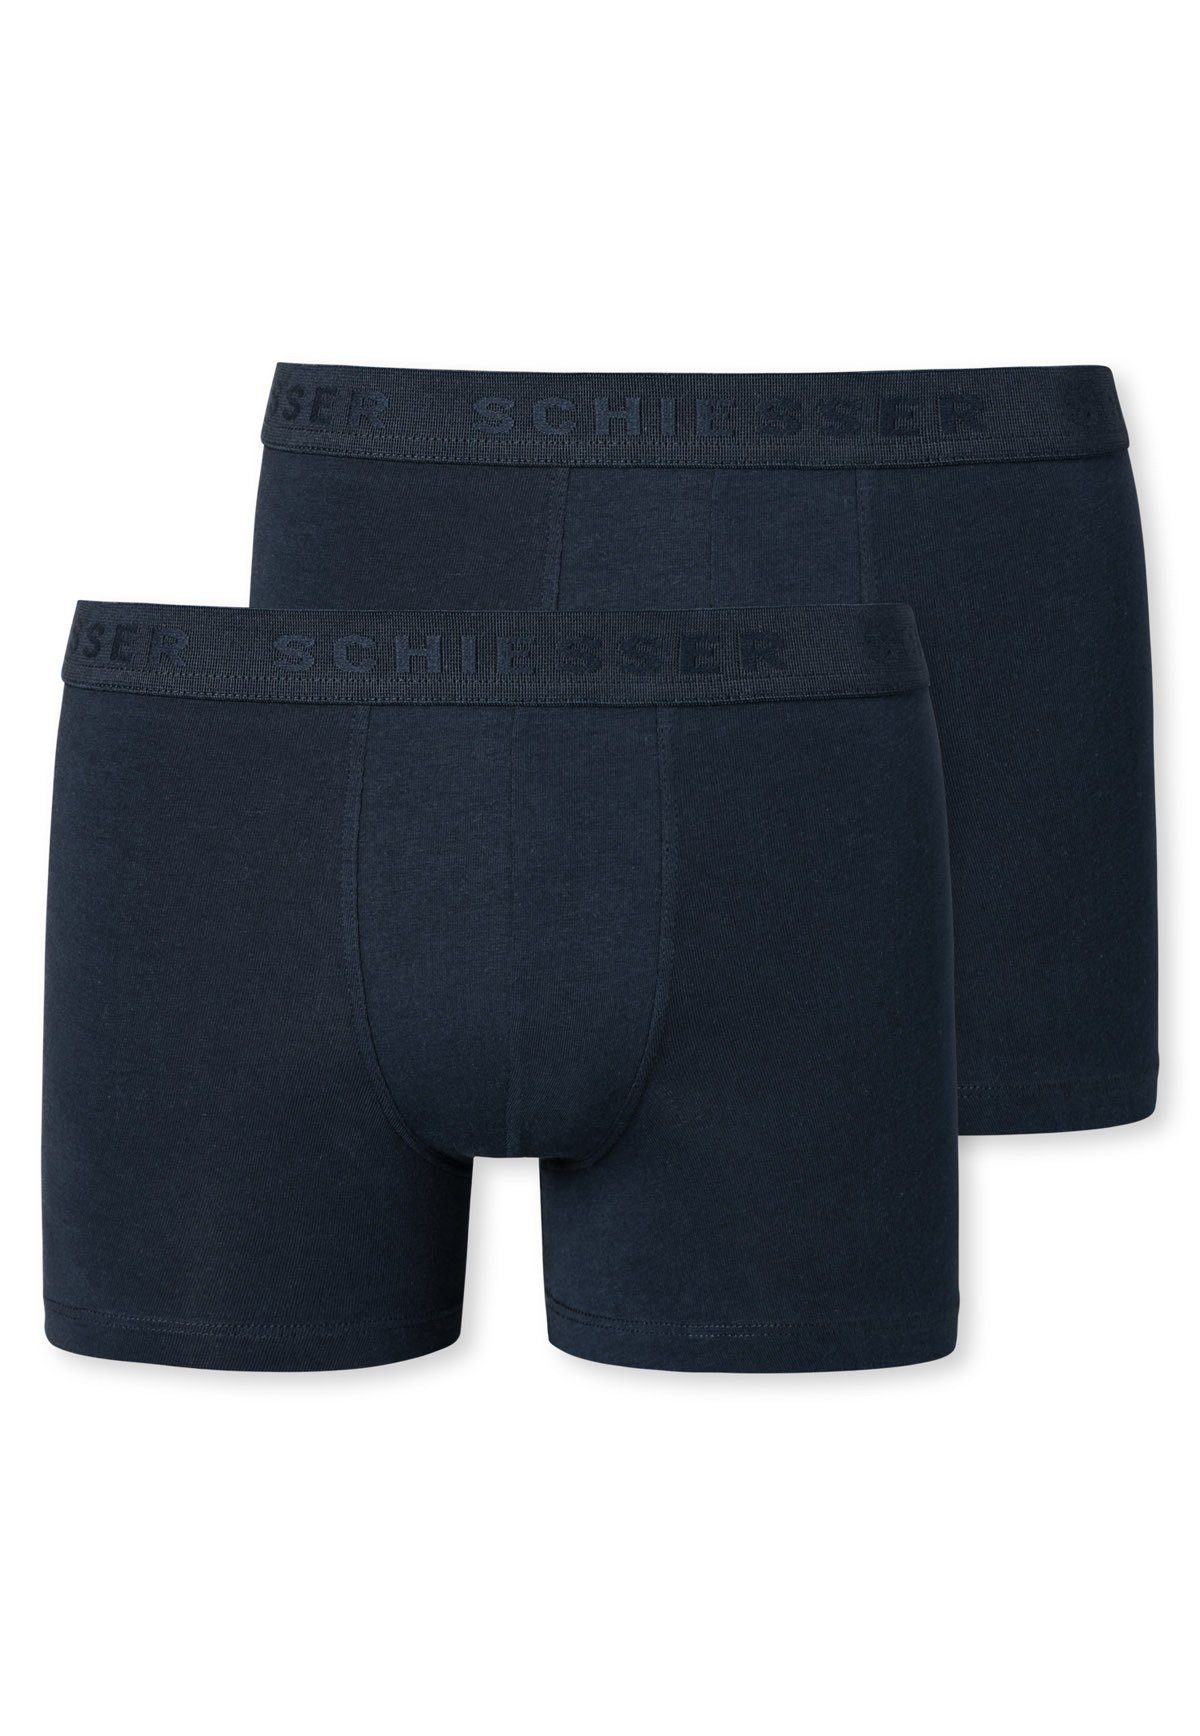 einfarbig 2er Shorts Serie Jungen - Boxer Pack Schiesser 95/5, Dunkelblau